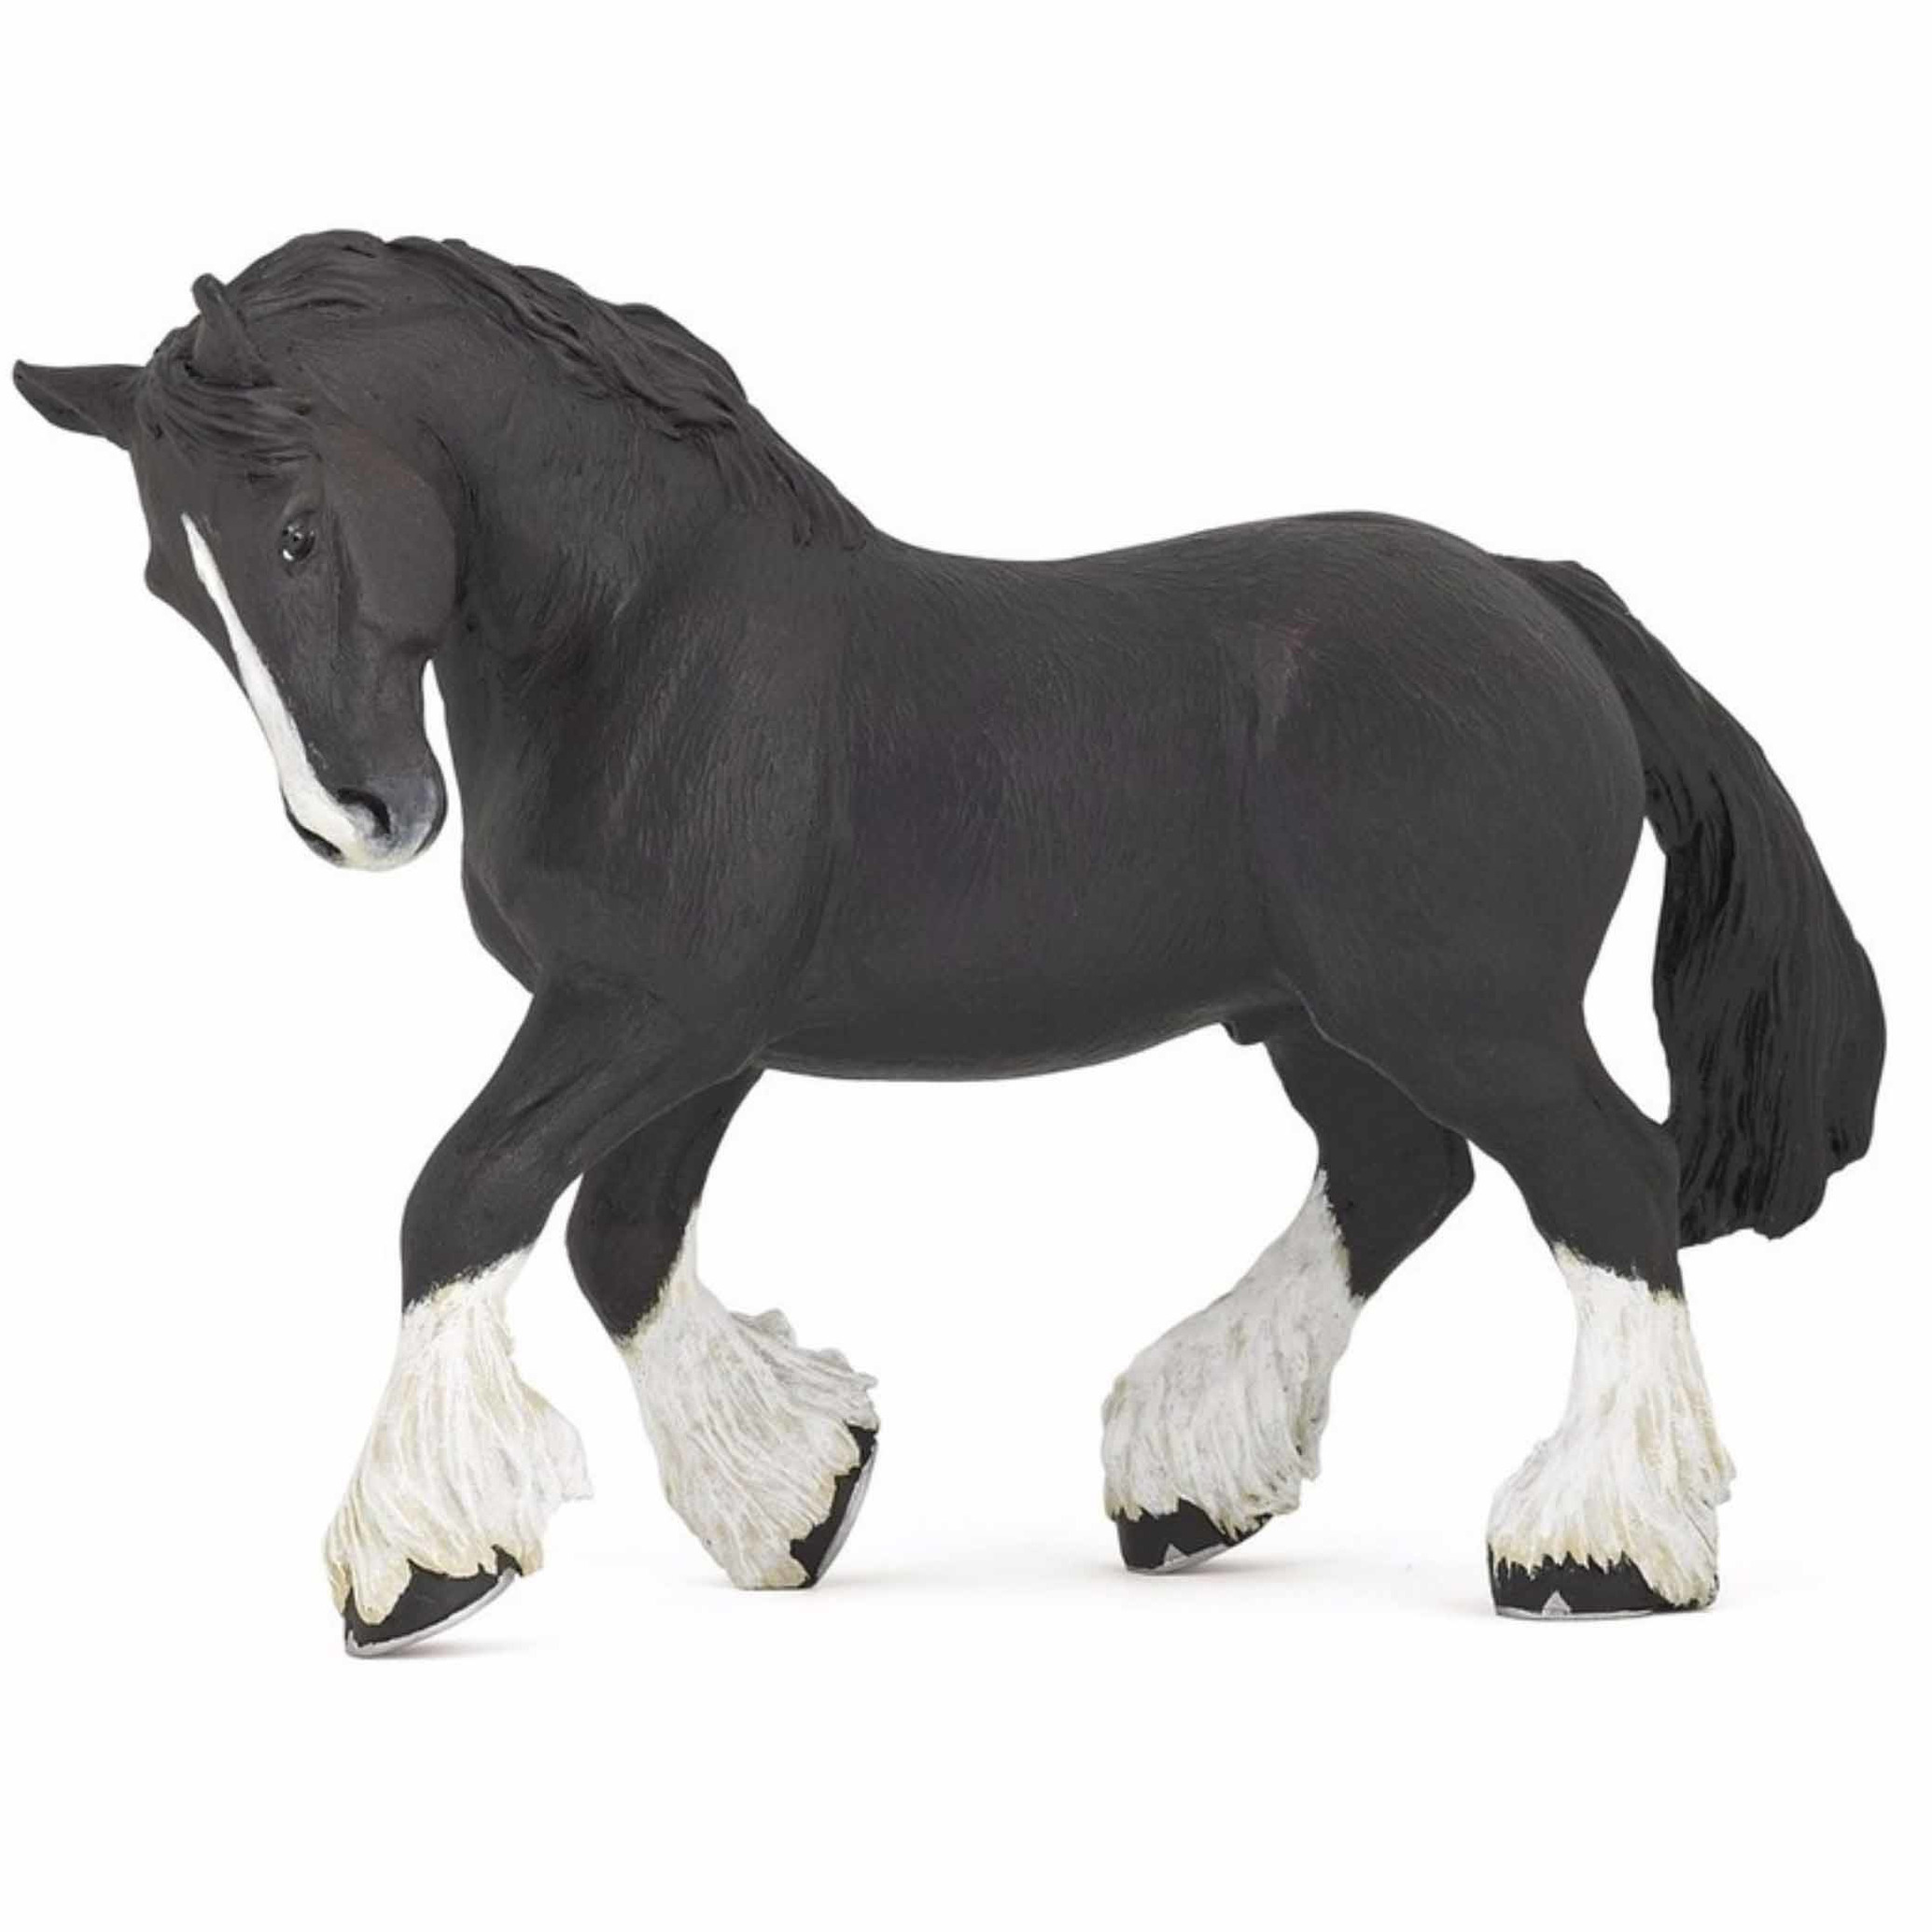 Plastic speelgoed figuur zwart Shire paard 15 cm